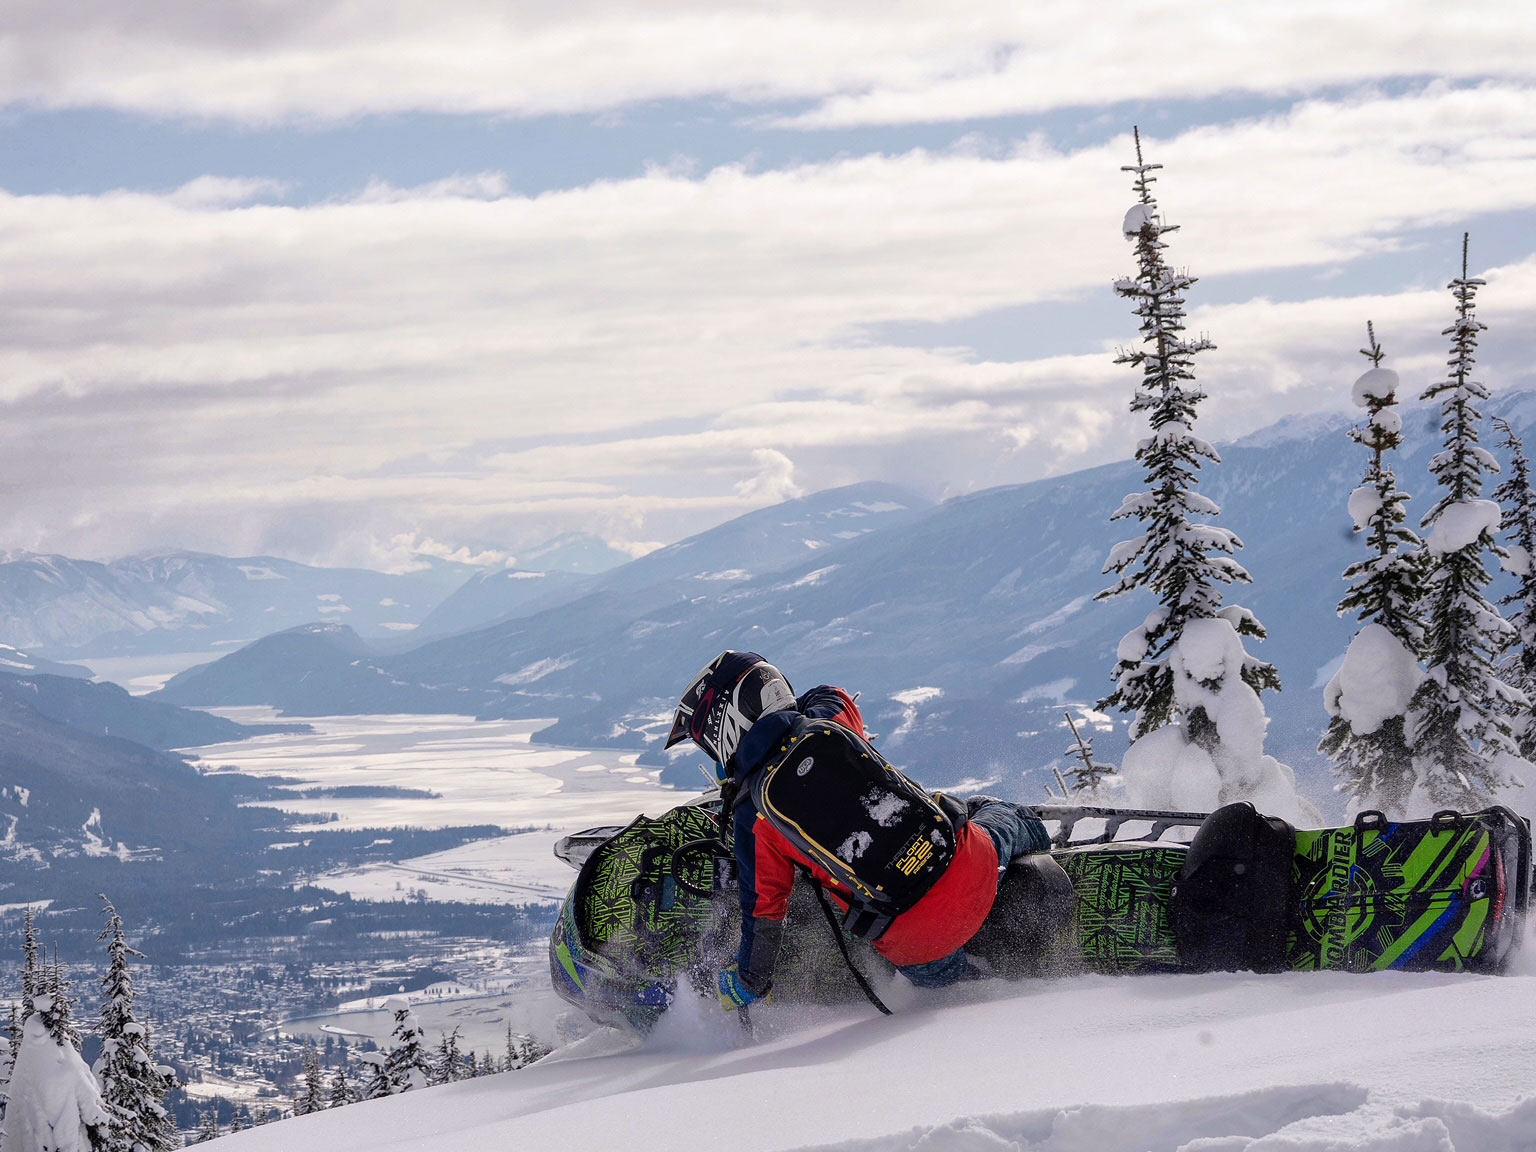 Ski-Doo Ambassador Michelle Salt riding a snowmobile on top of a montain